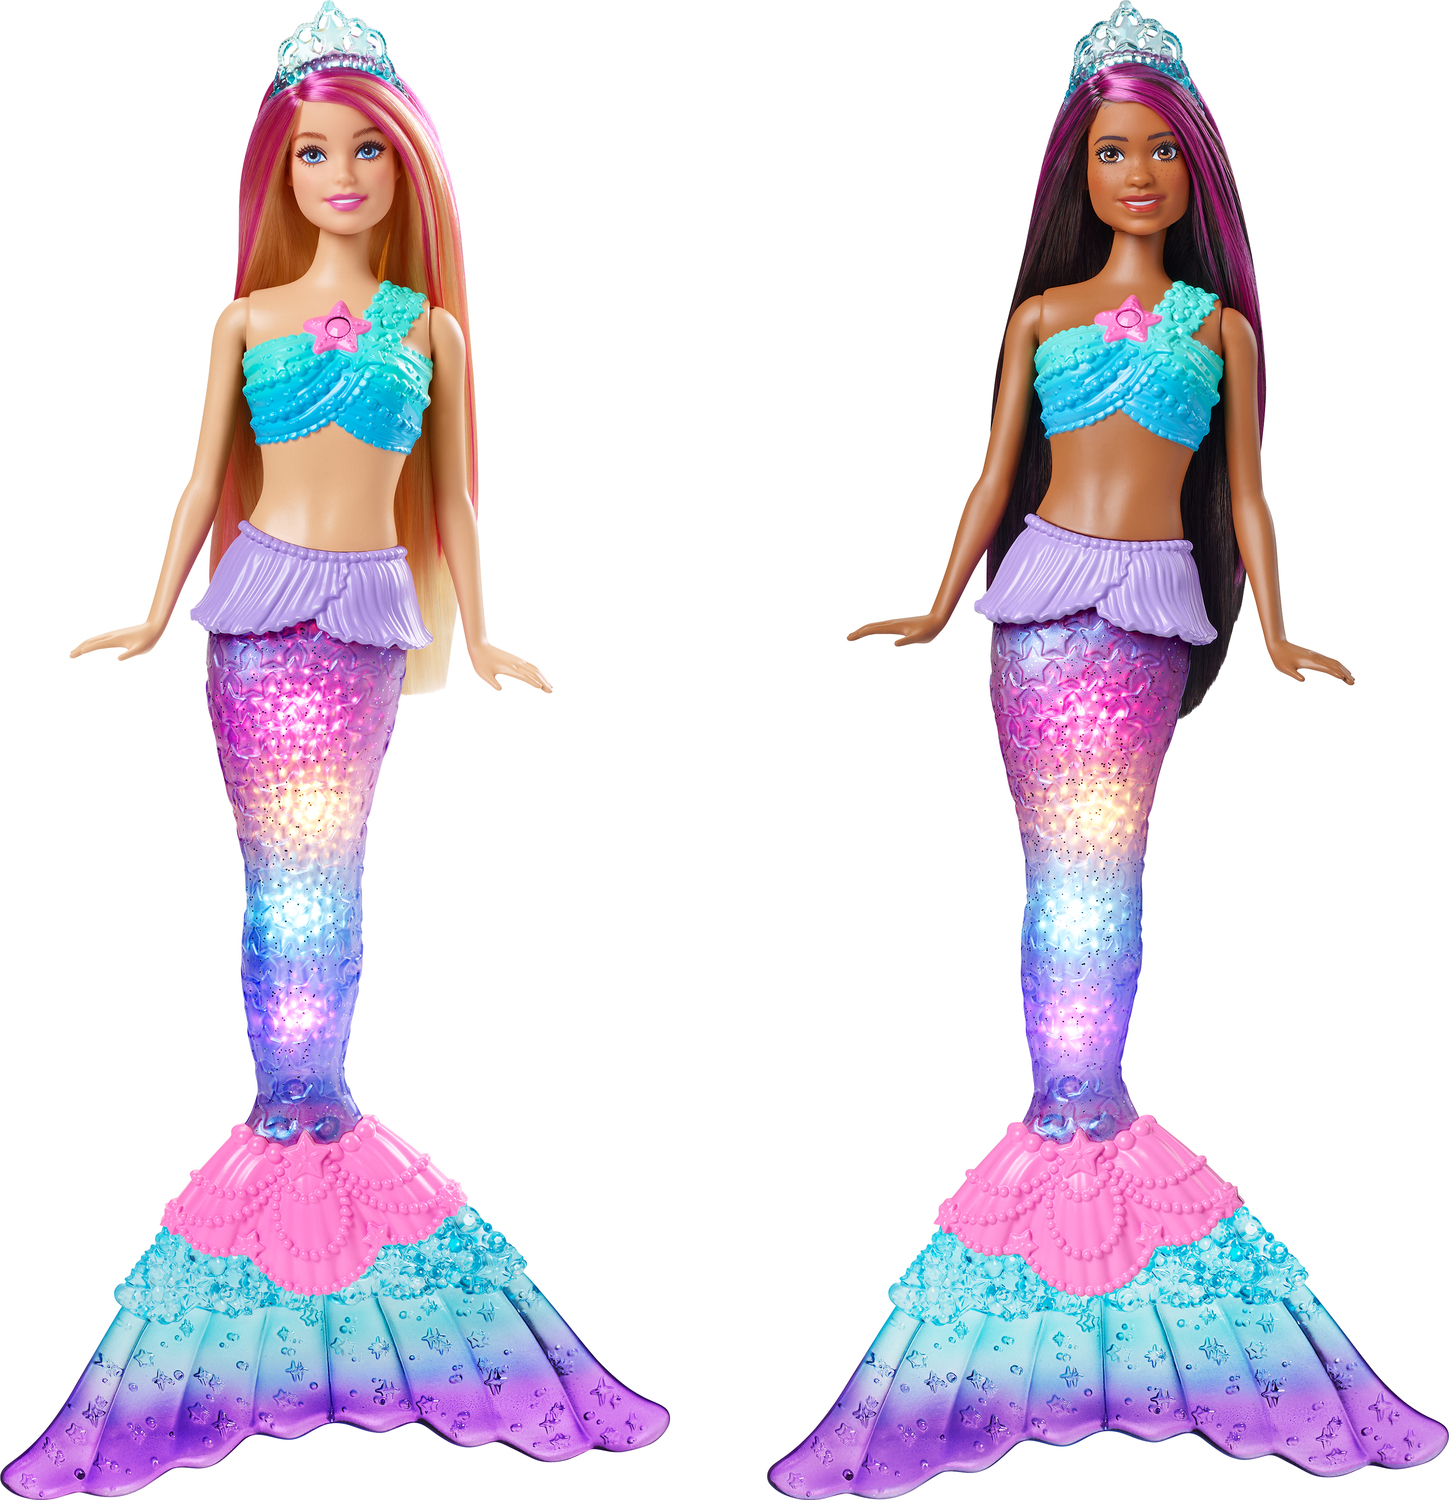 Barbie Dreamtopia Twinkle Lights Mermaid Doll - The Toy Box Hanover